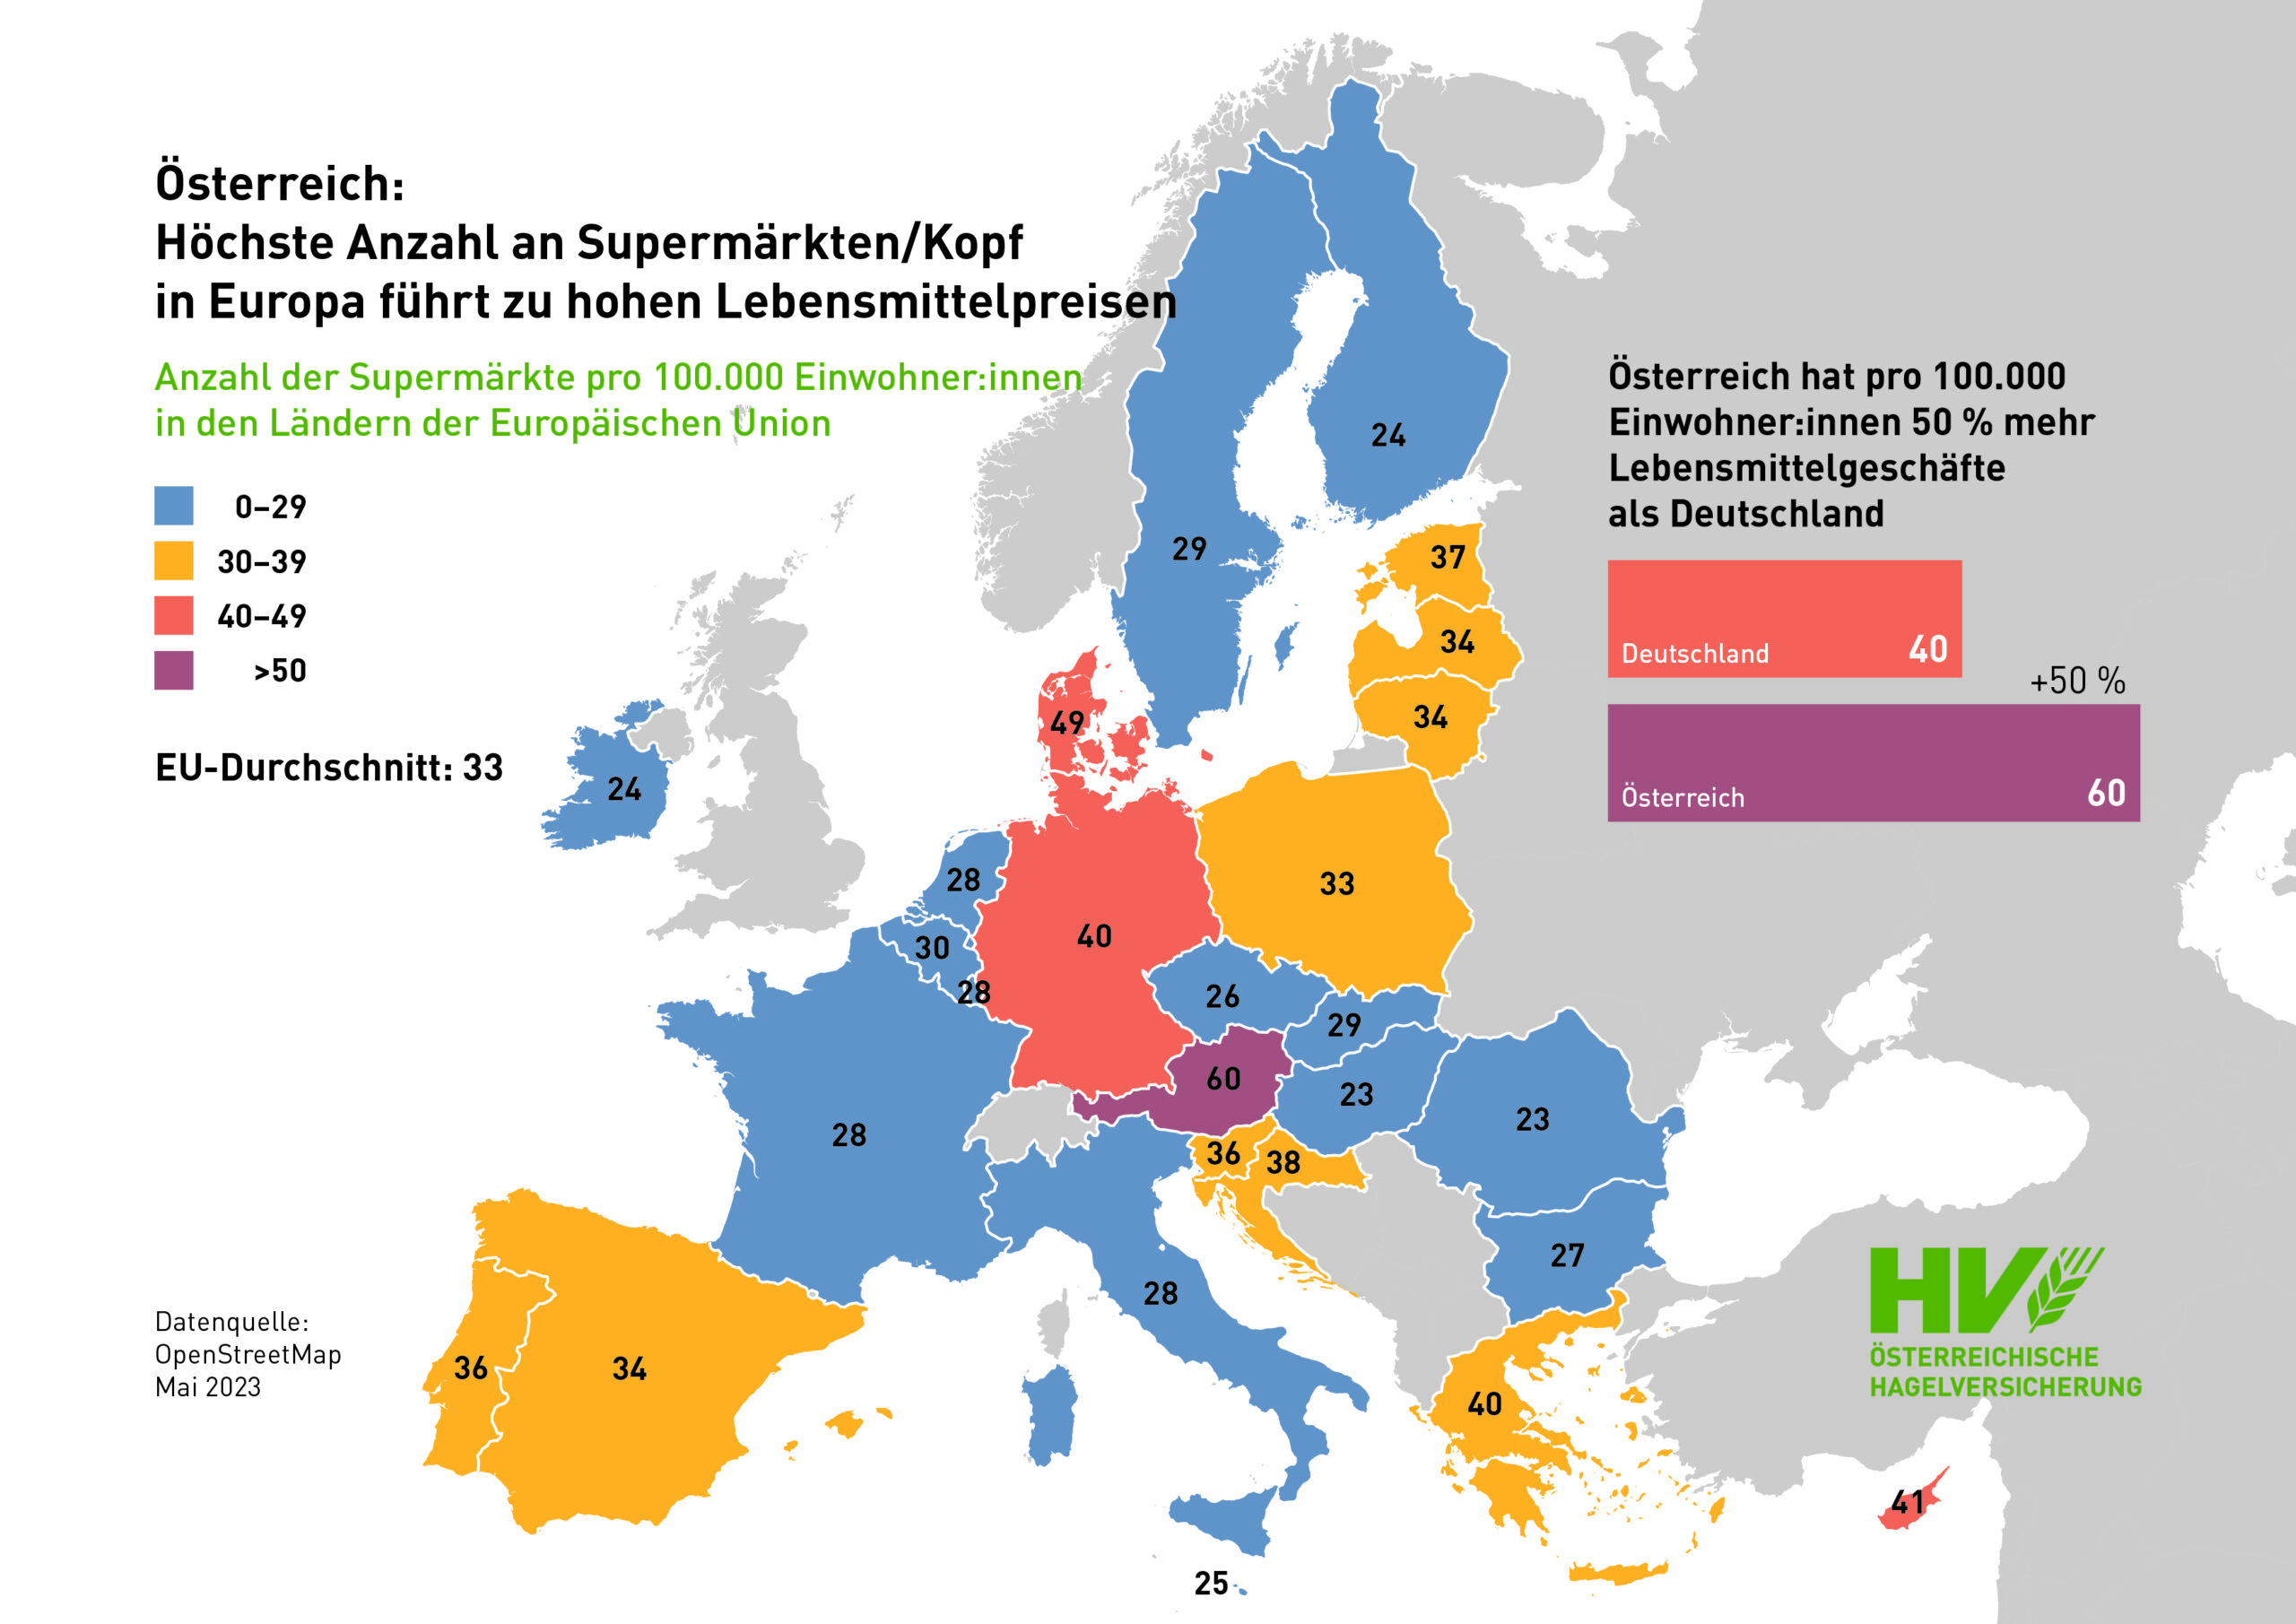 Österreich: Höchste Anzahl an Supermärkten/Kopf in Europa führt zu hohen Lebensmittelpreisen (© ÖHV/OpenStreetMap, Mai 2023)